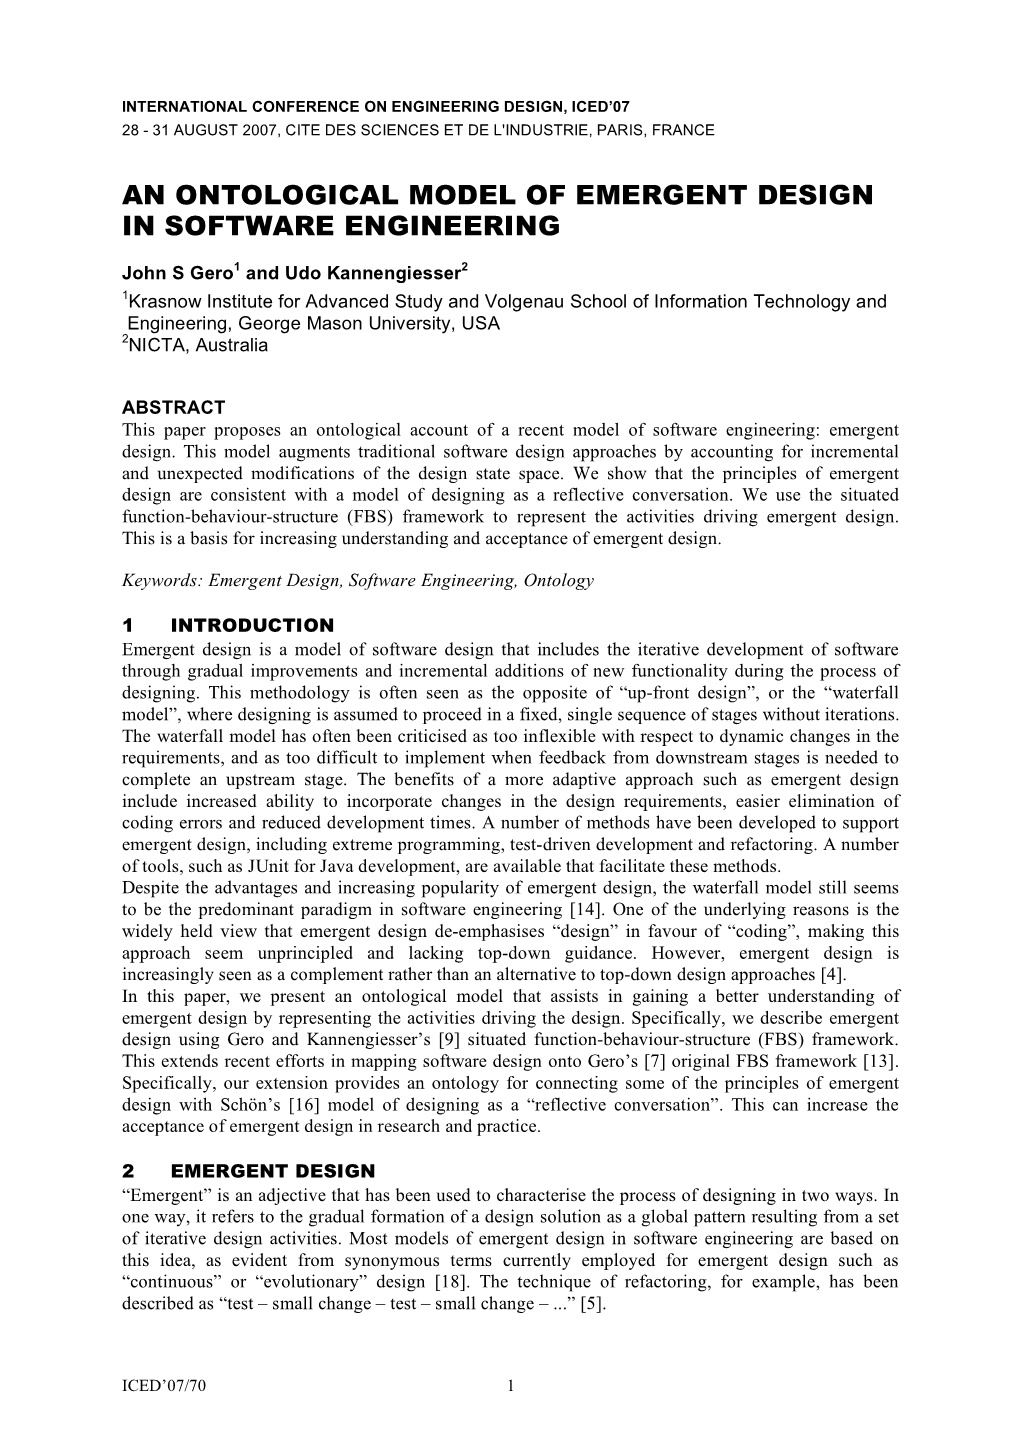 An Ontological Model of Emergent Design in Software Engineering